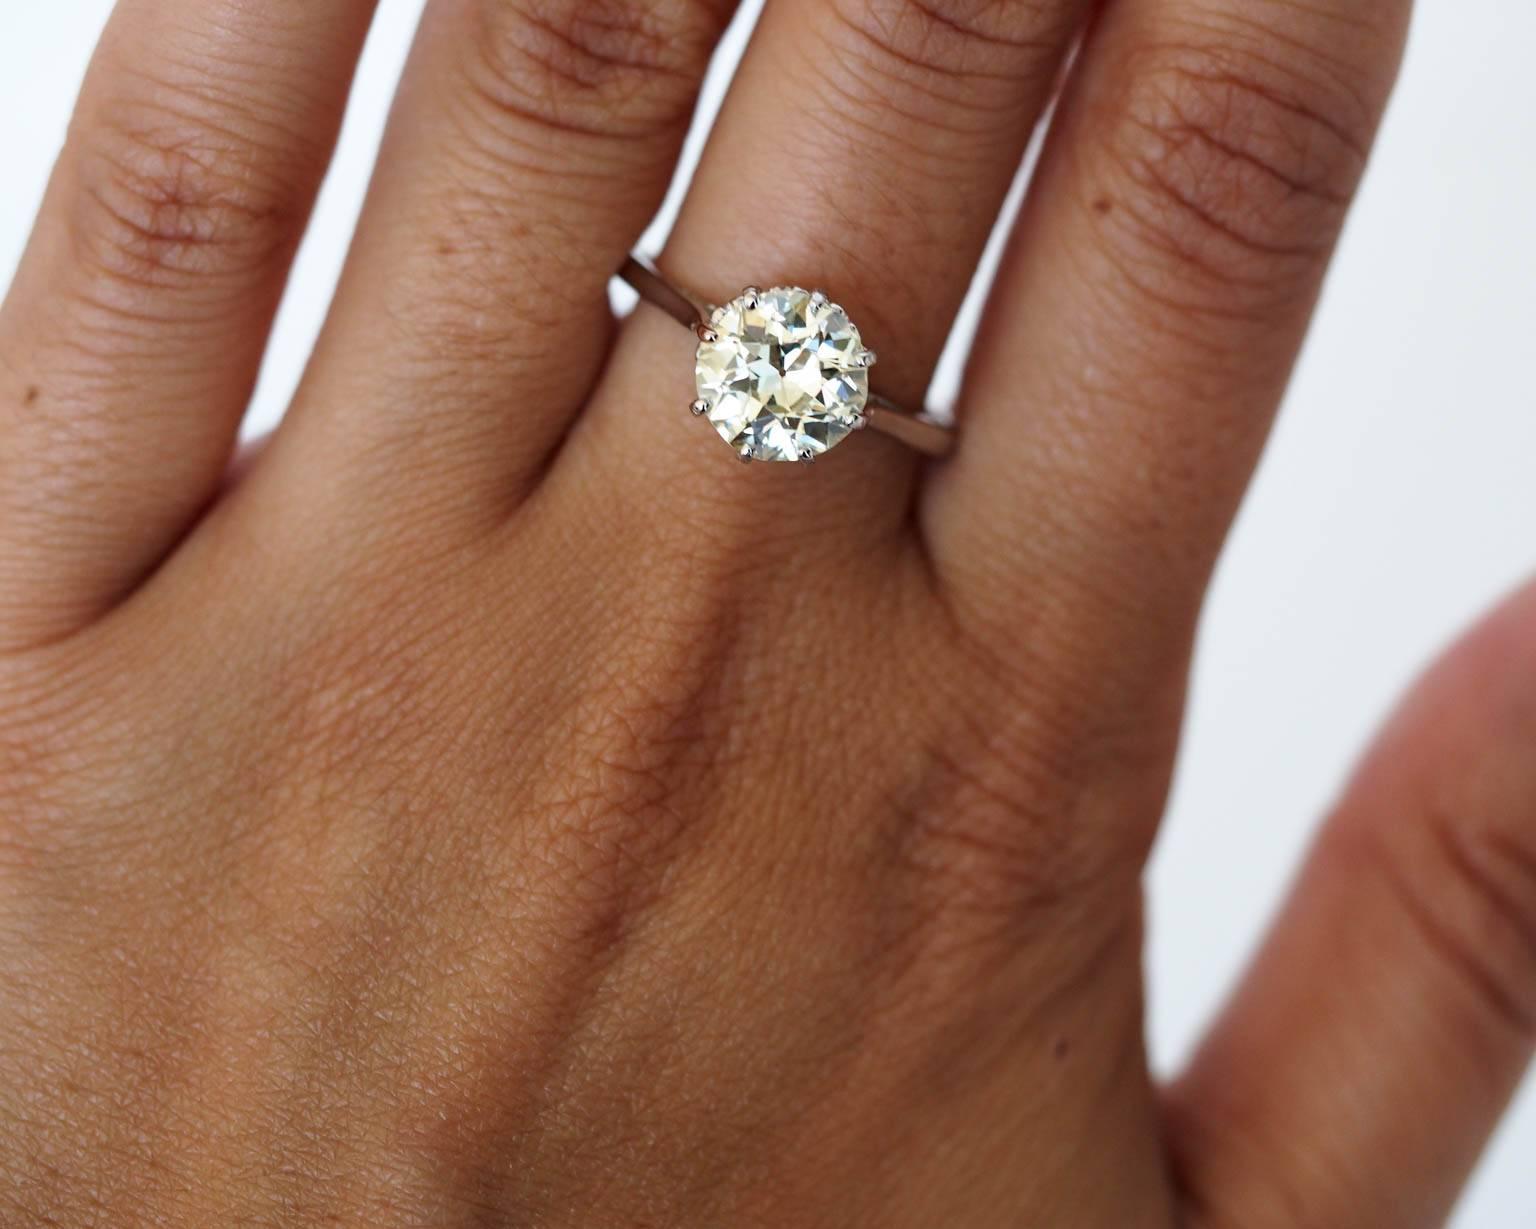 Women's 1920s 1.99 Carat GIA Cert Old European Cut Diamond Engagement Ring